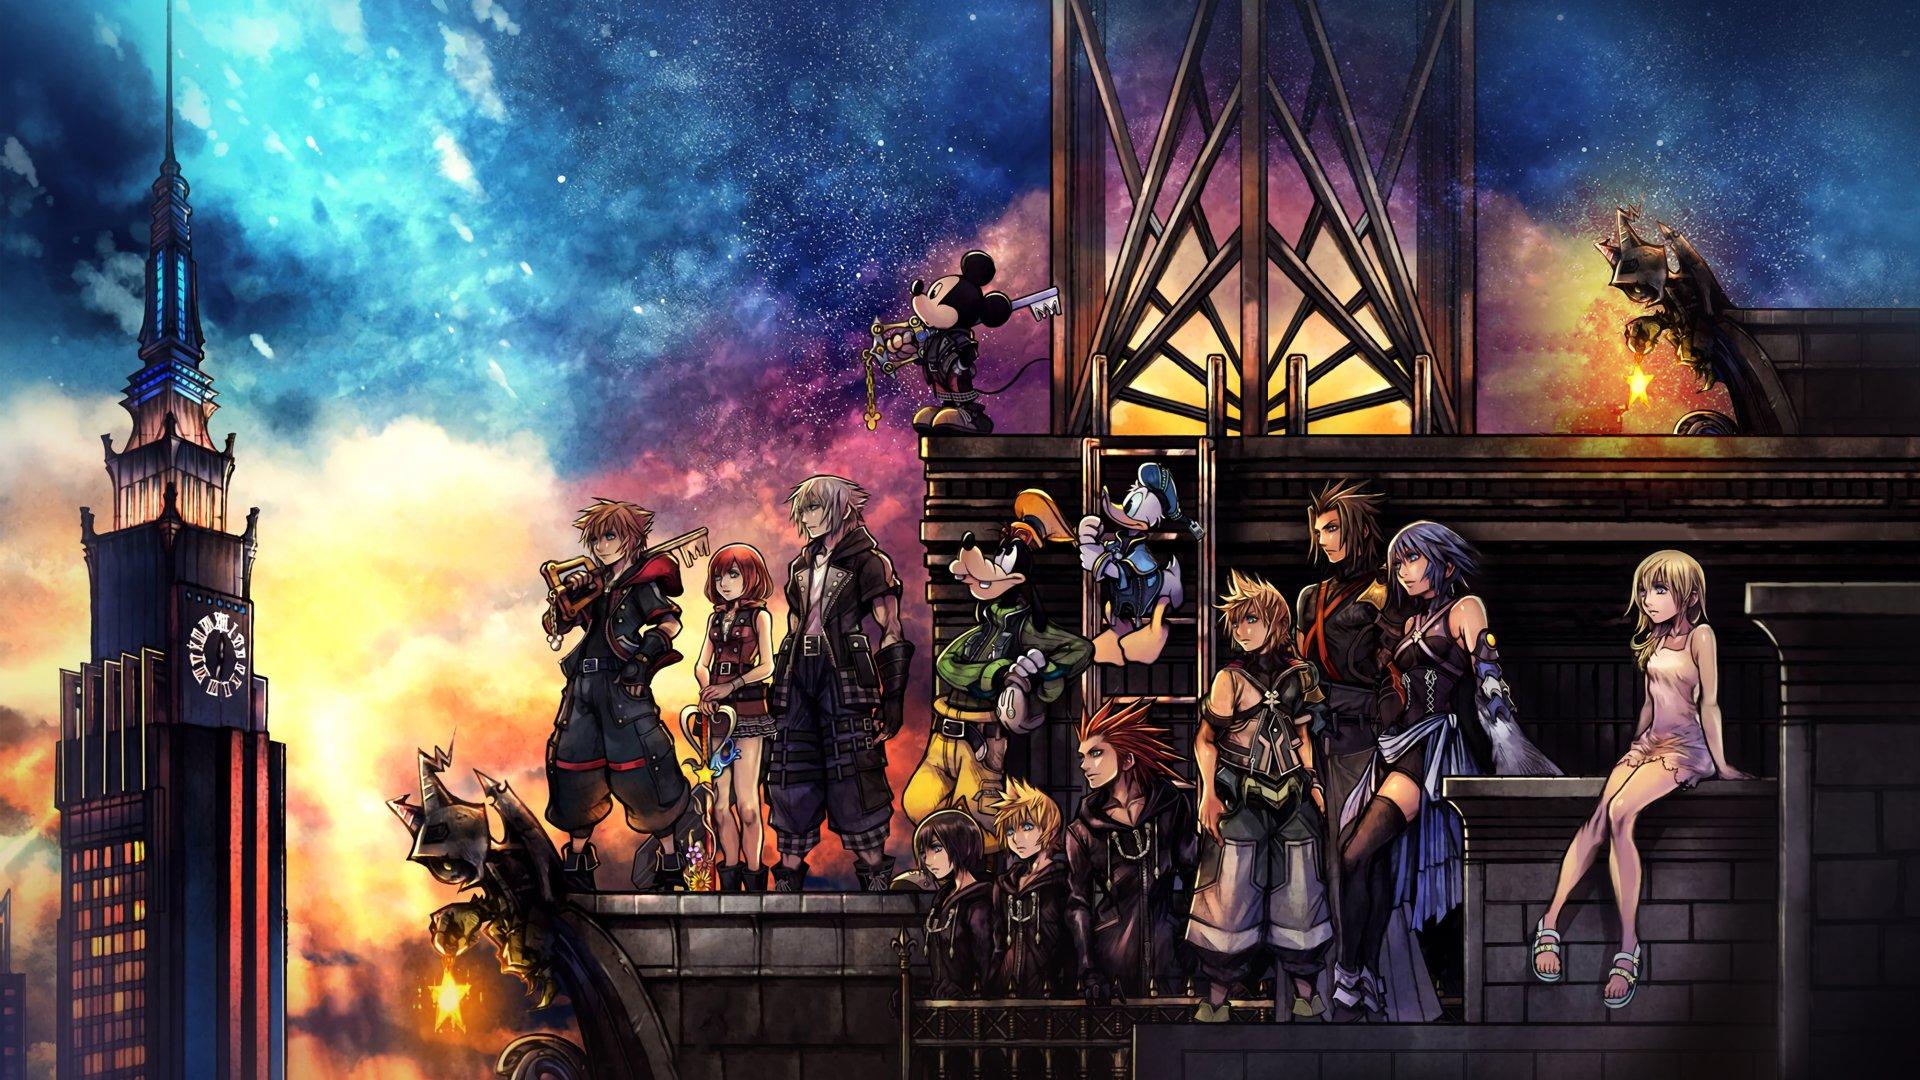 Kingdom Hearts III HD Wallpaper and Background Image